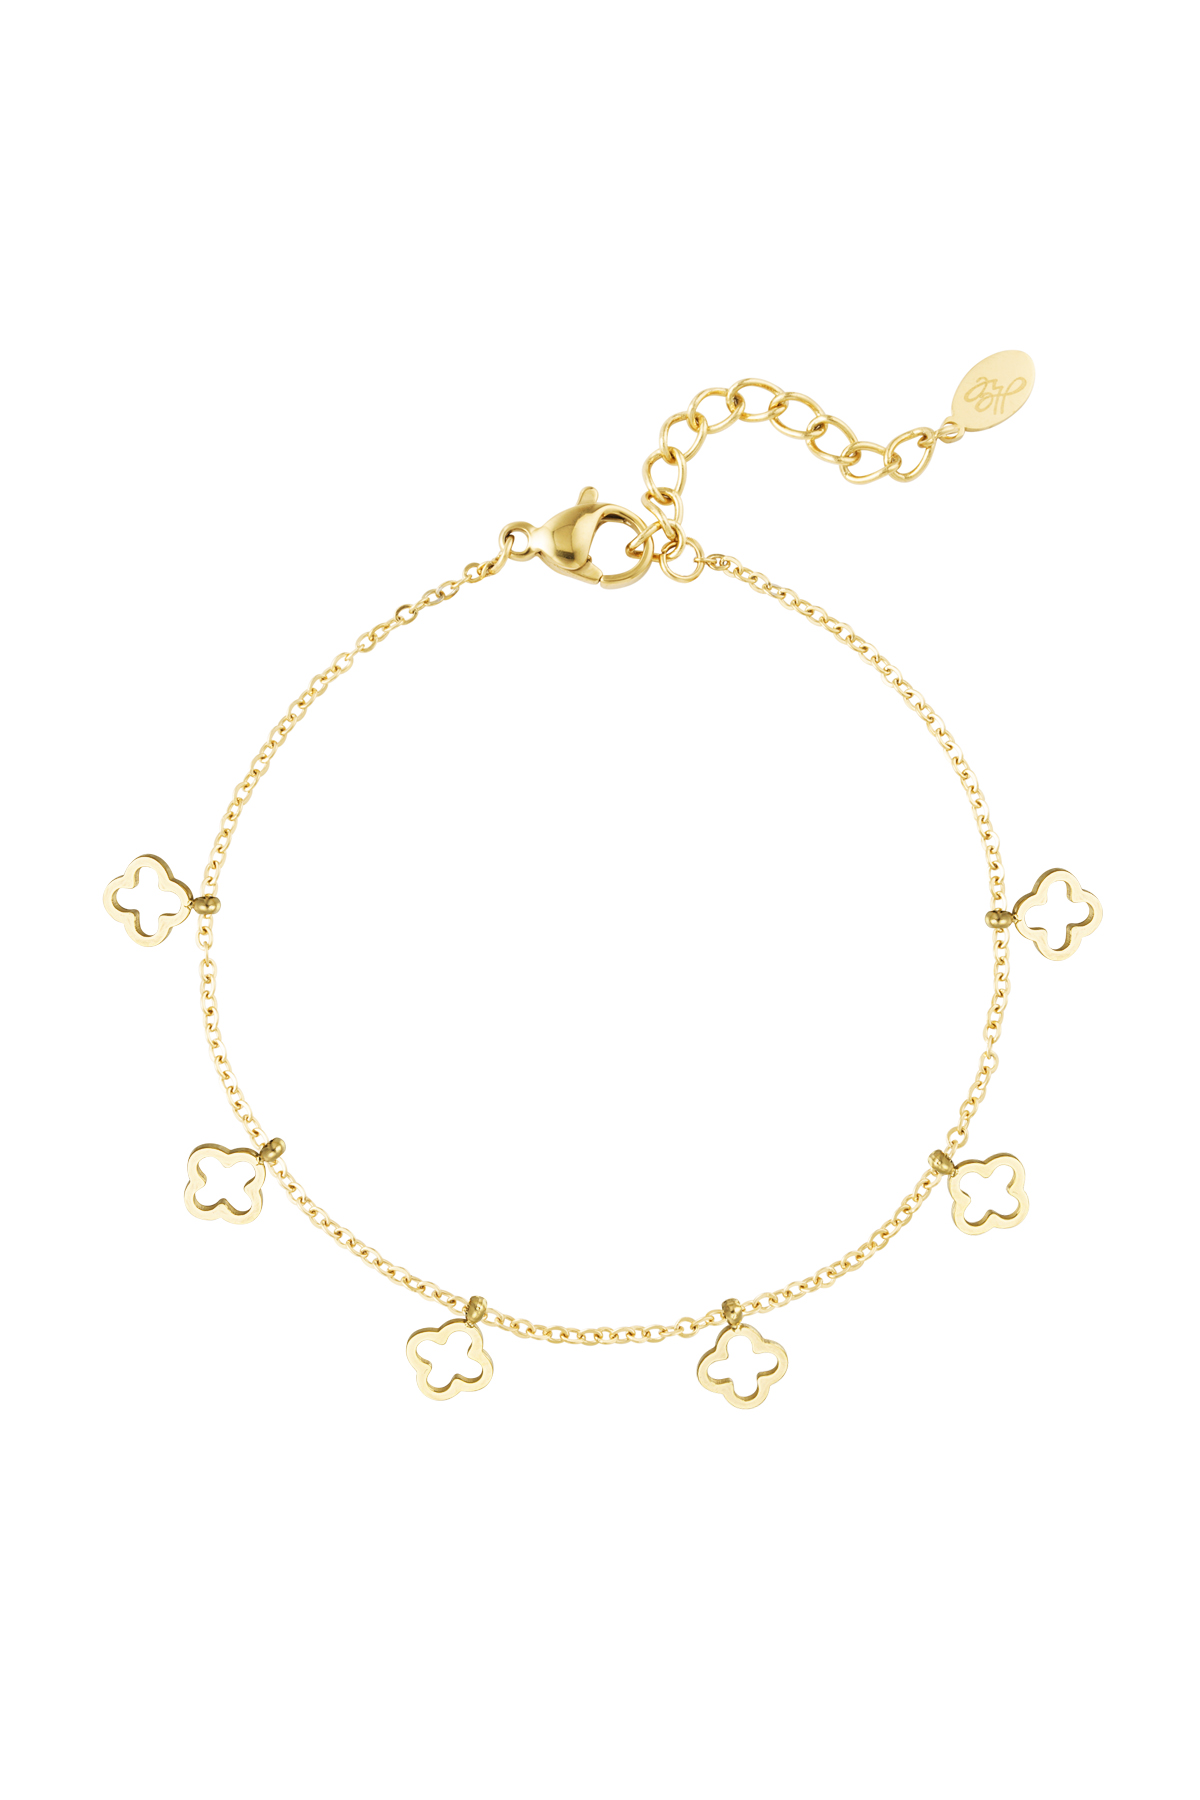 Bracelet 6 clovers - gold 